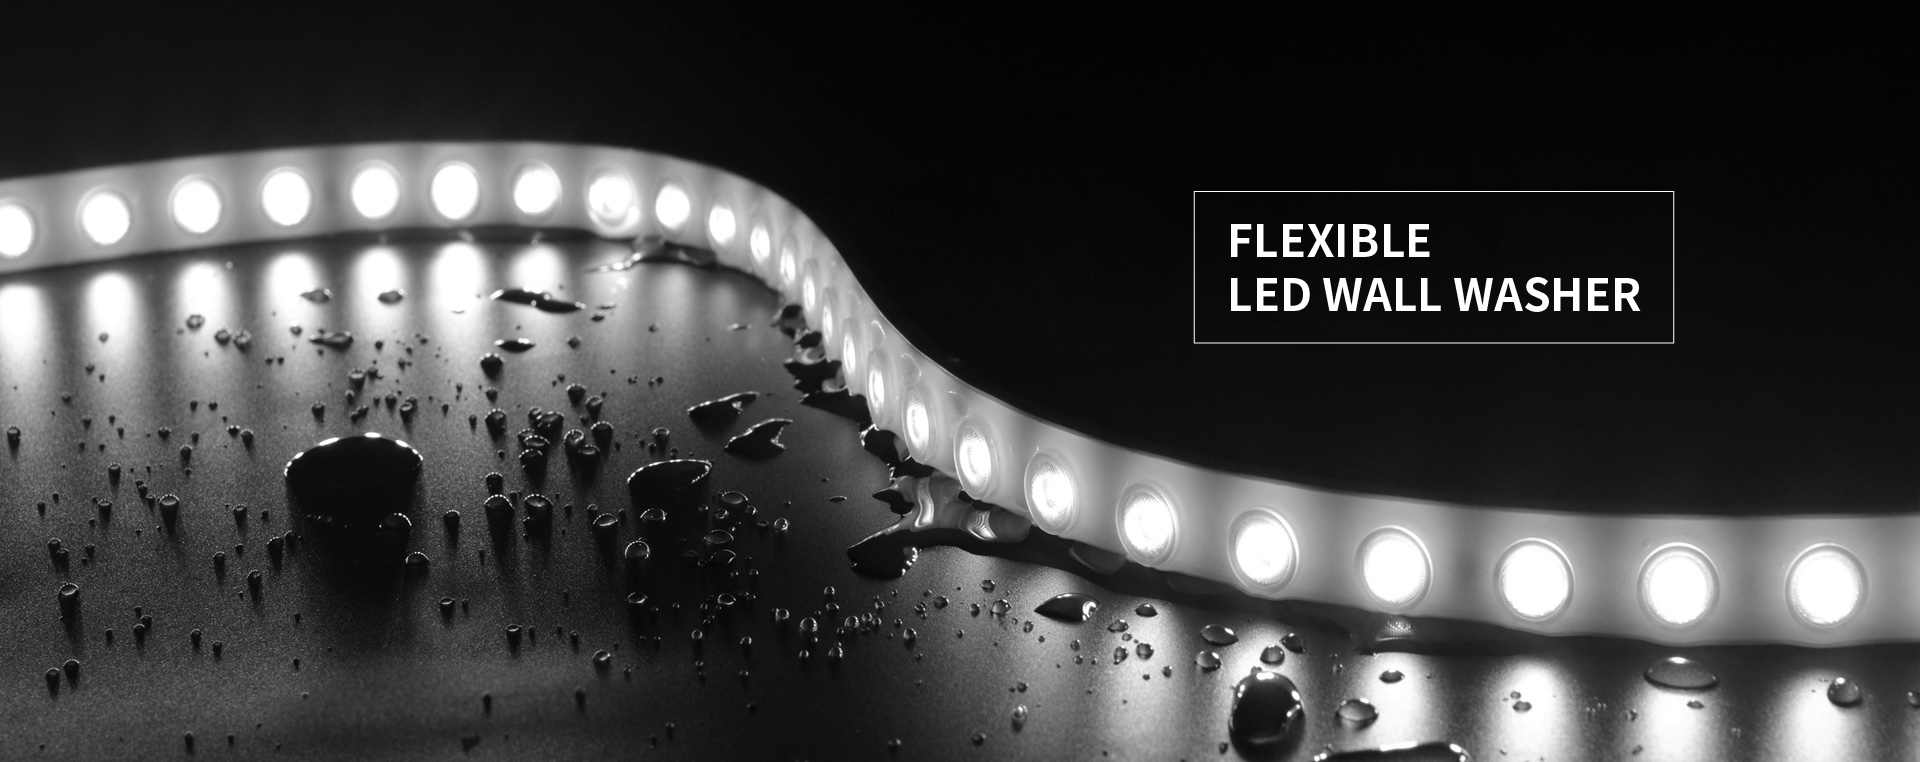  Flexible LED Wall Washer